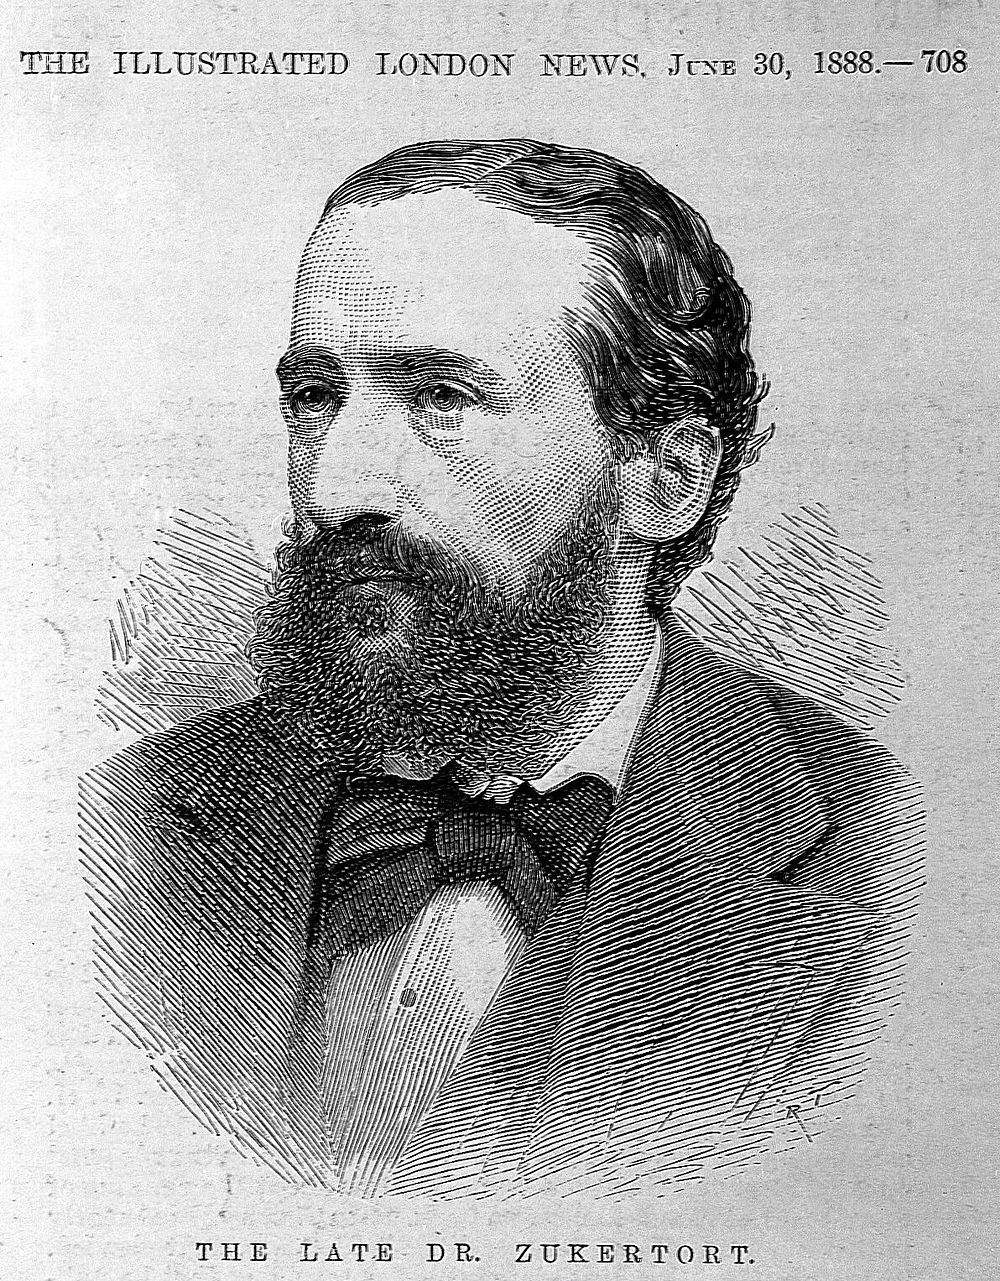 Portrait of J. H. Zukertort